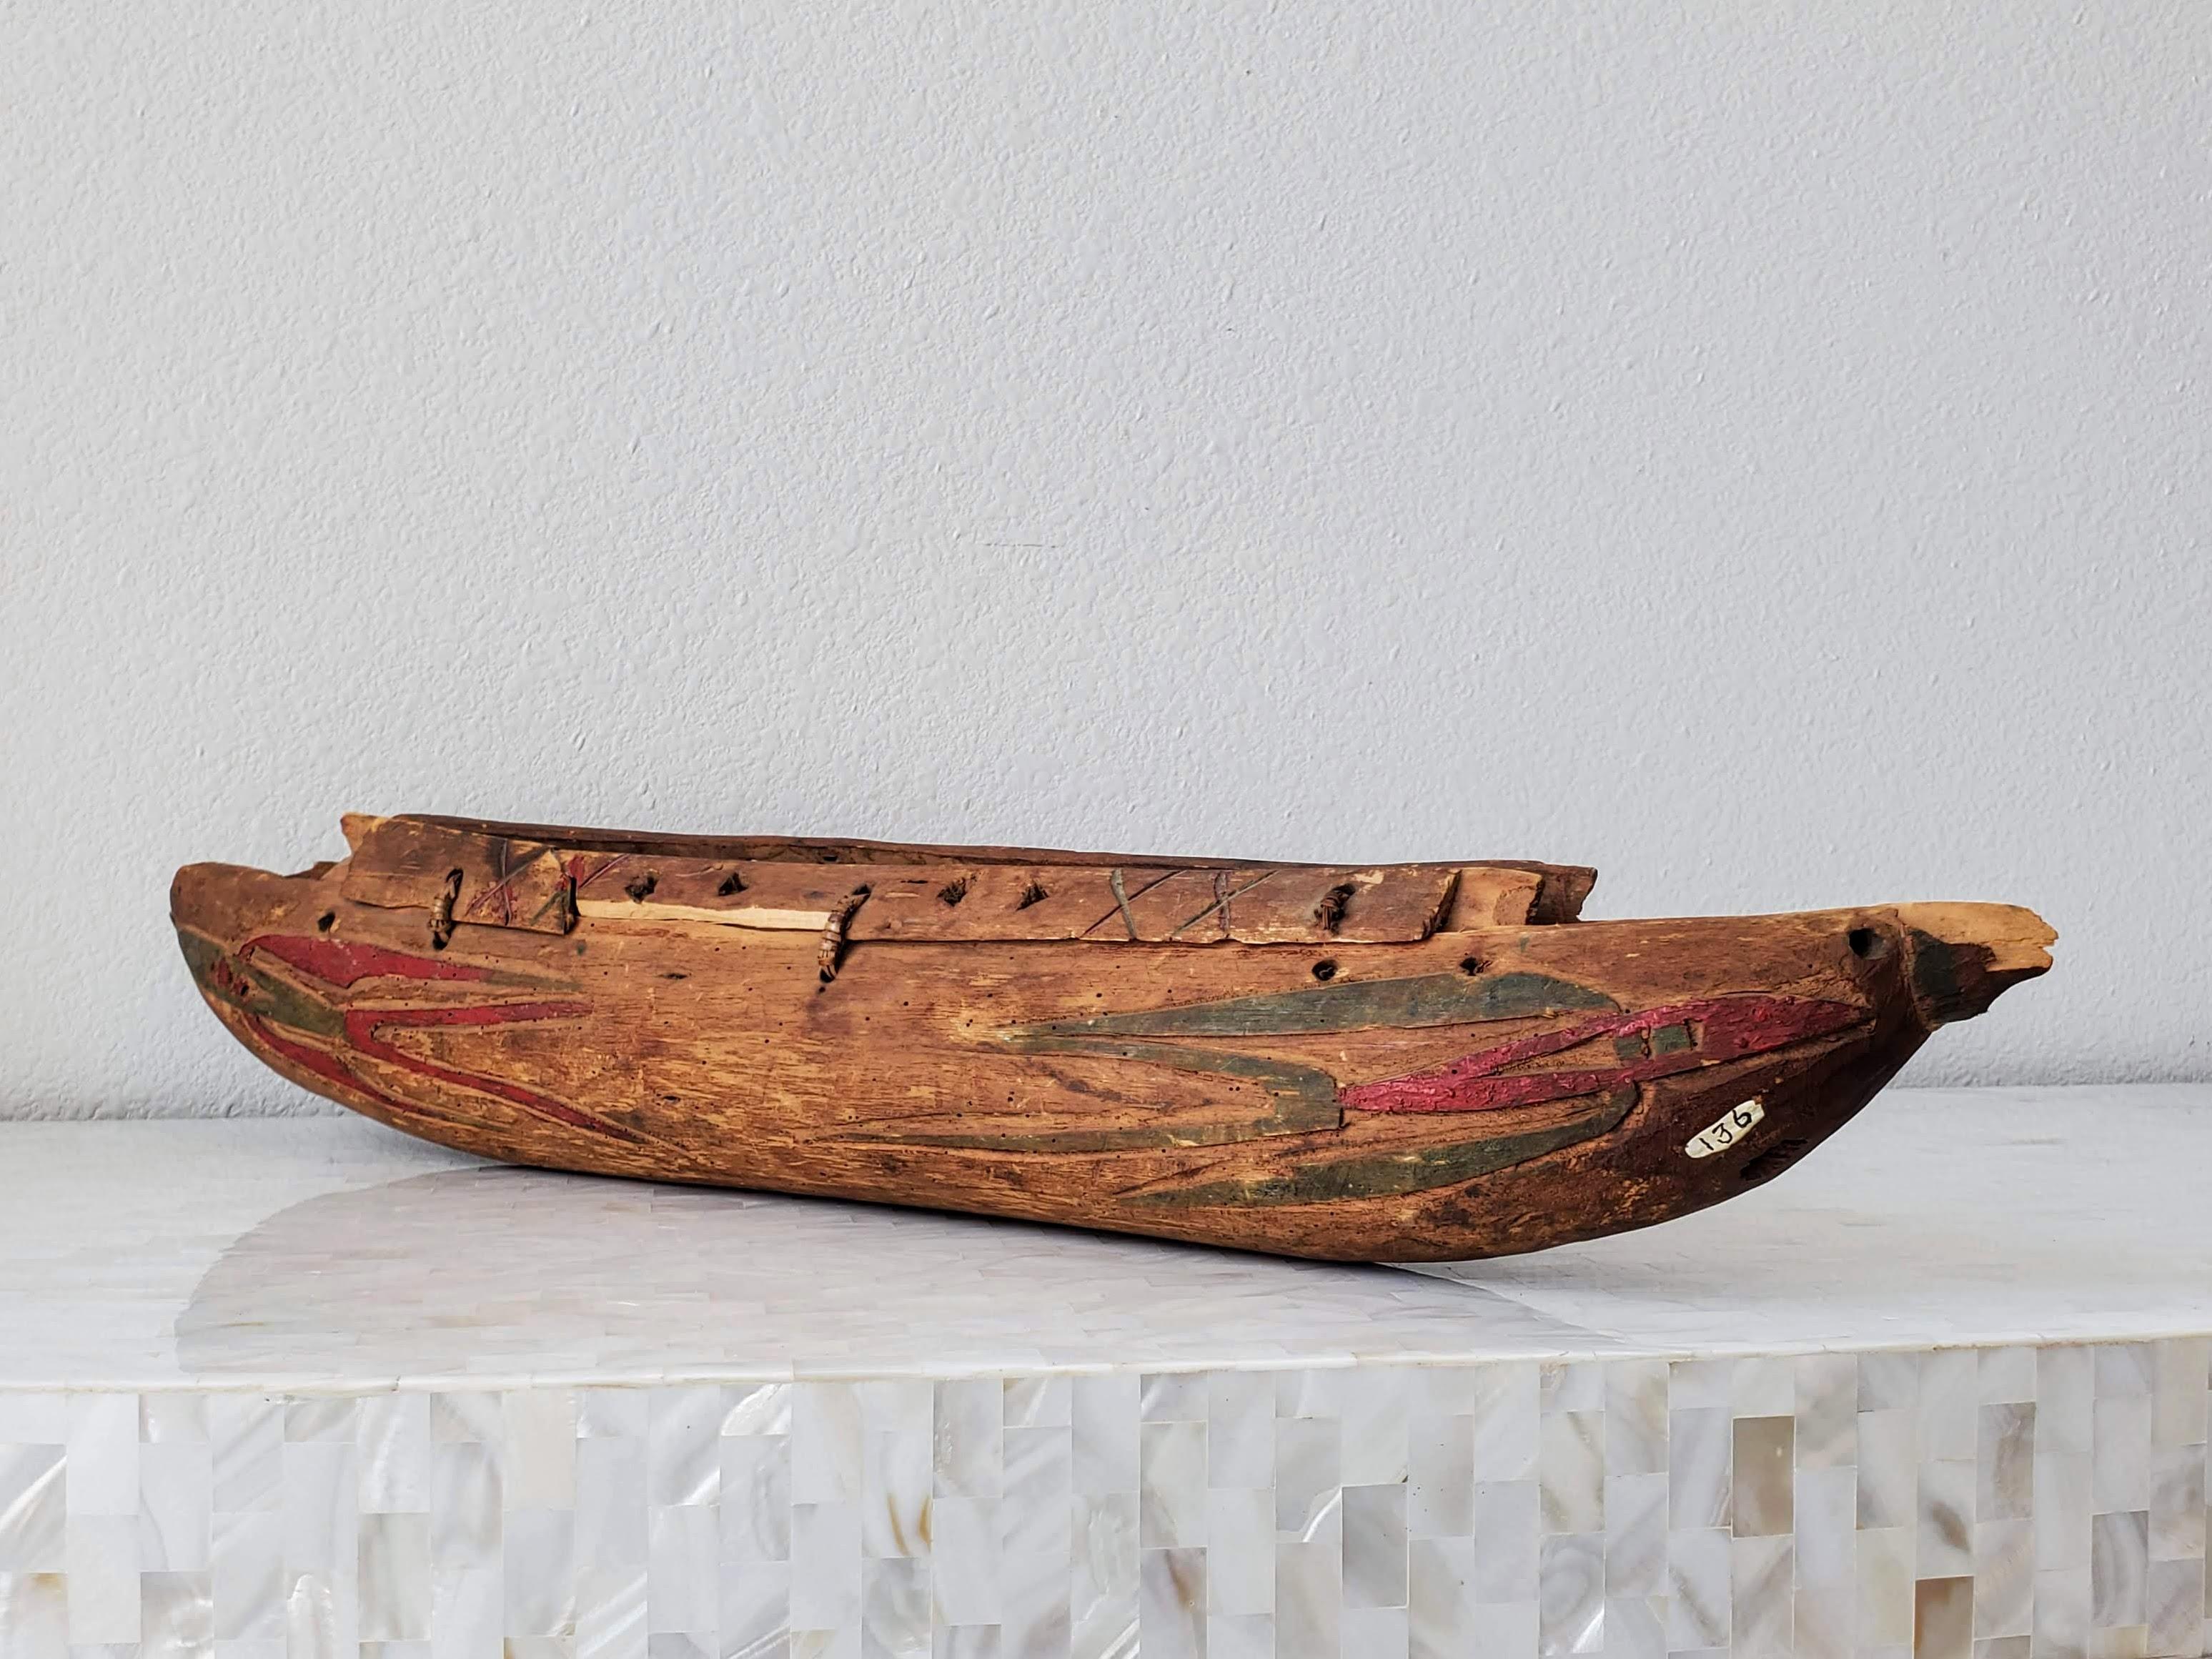 carved canoe